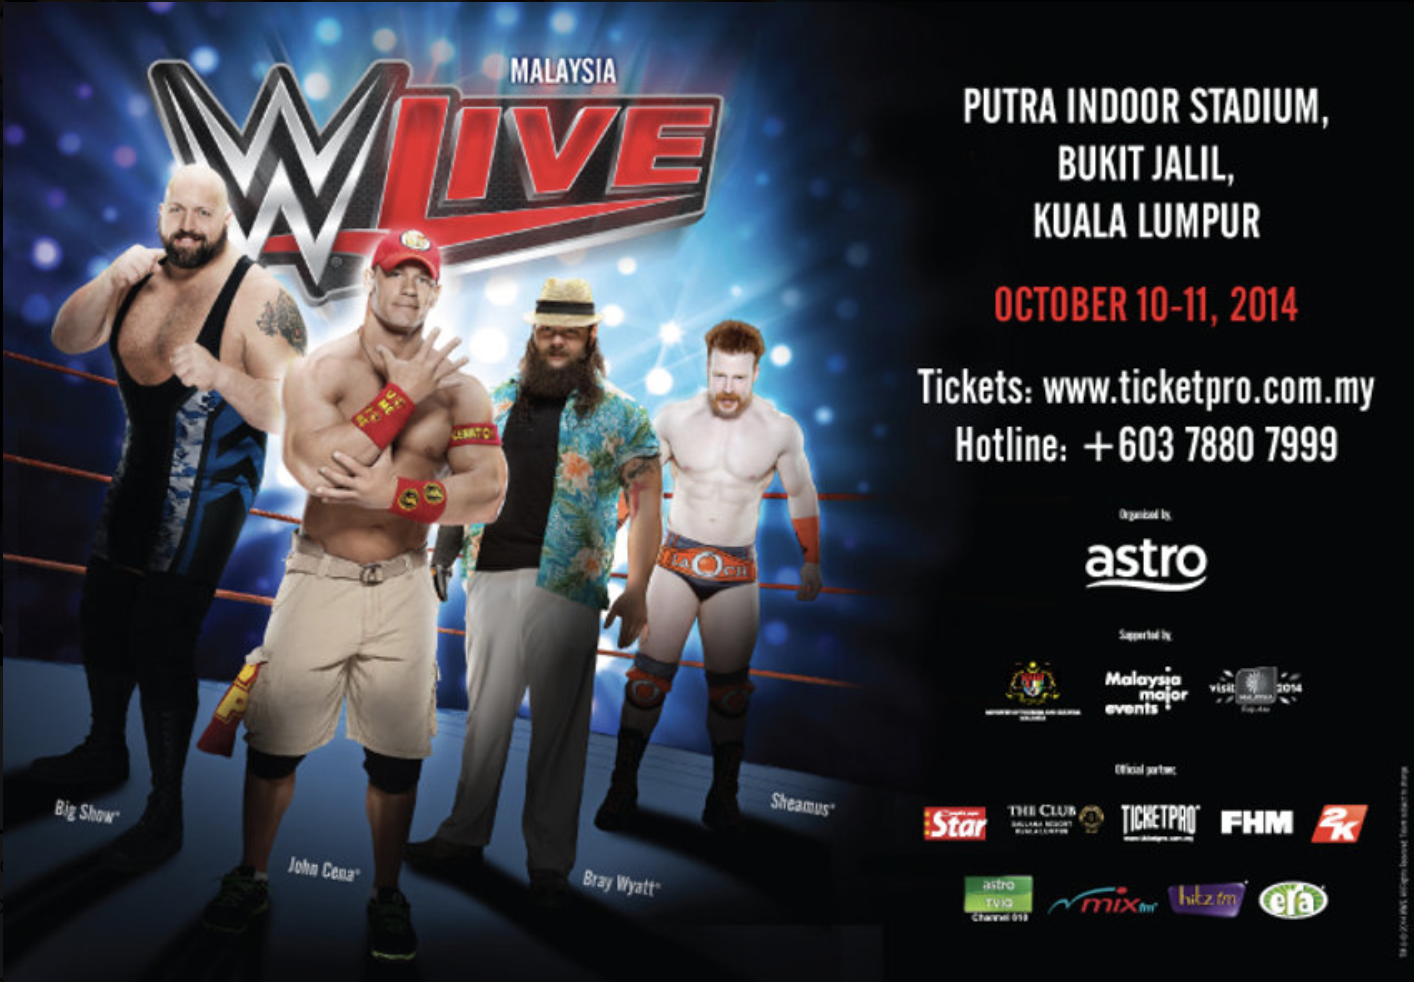 //www.specializedsportsservices.com/wp-content/uploads/2021/09/WWE-Live-KL-3-1.png